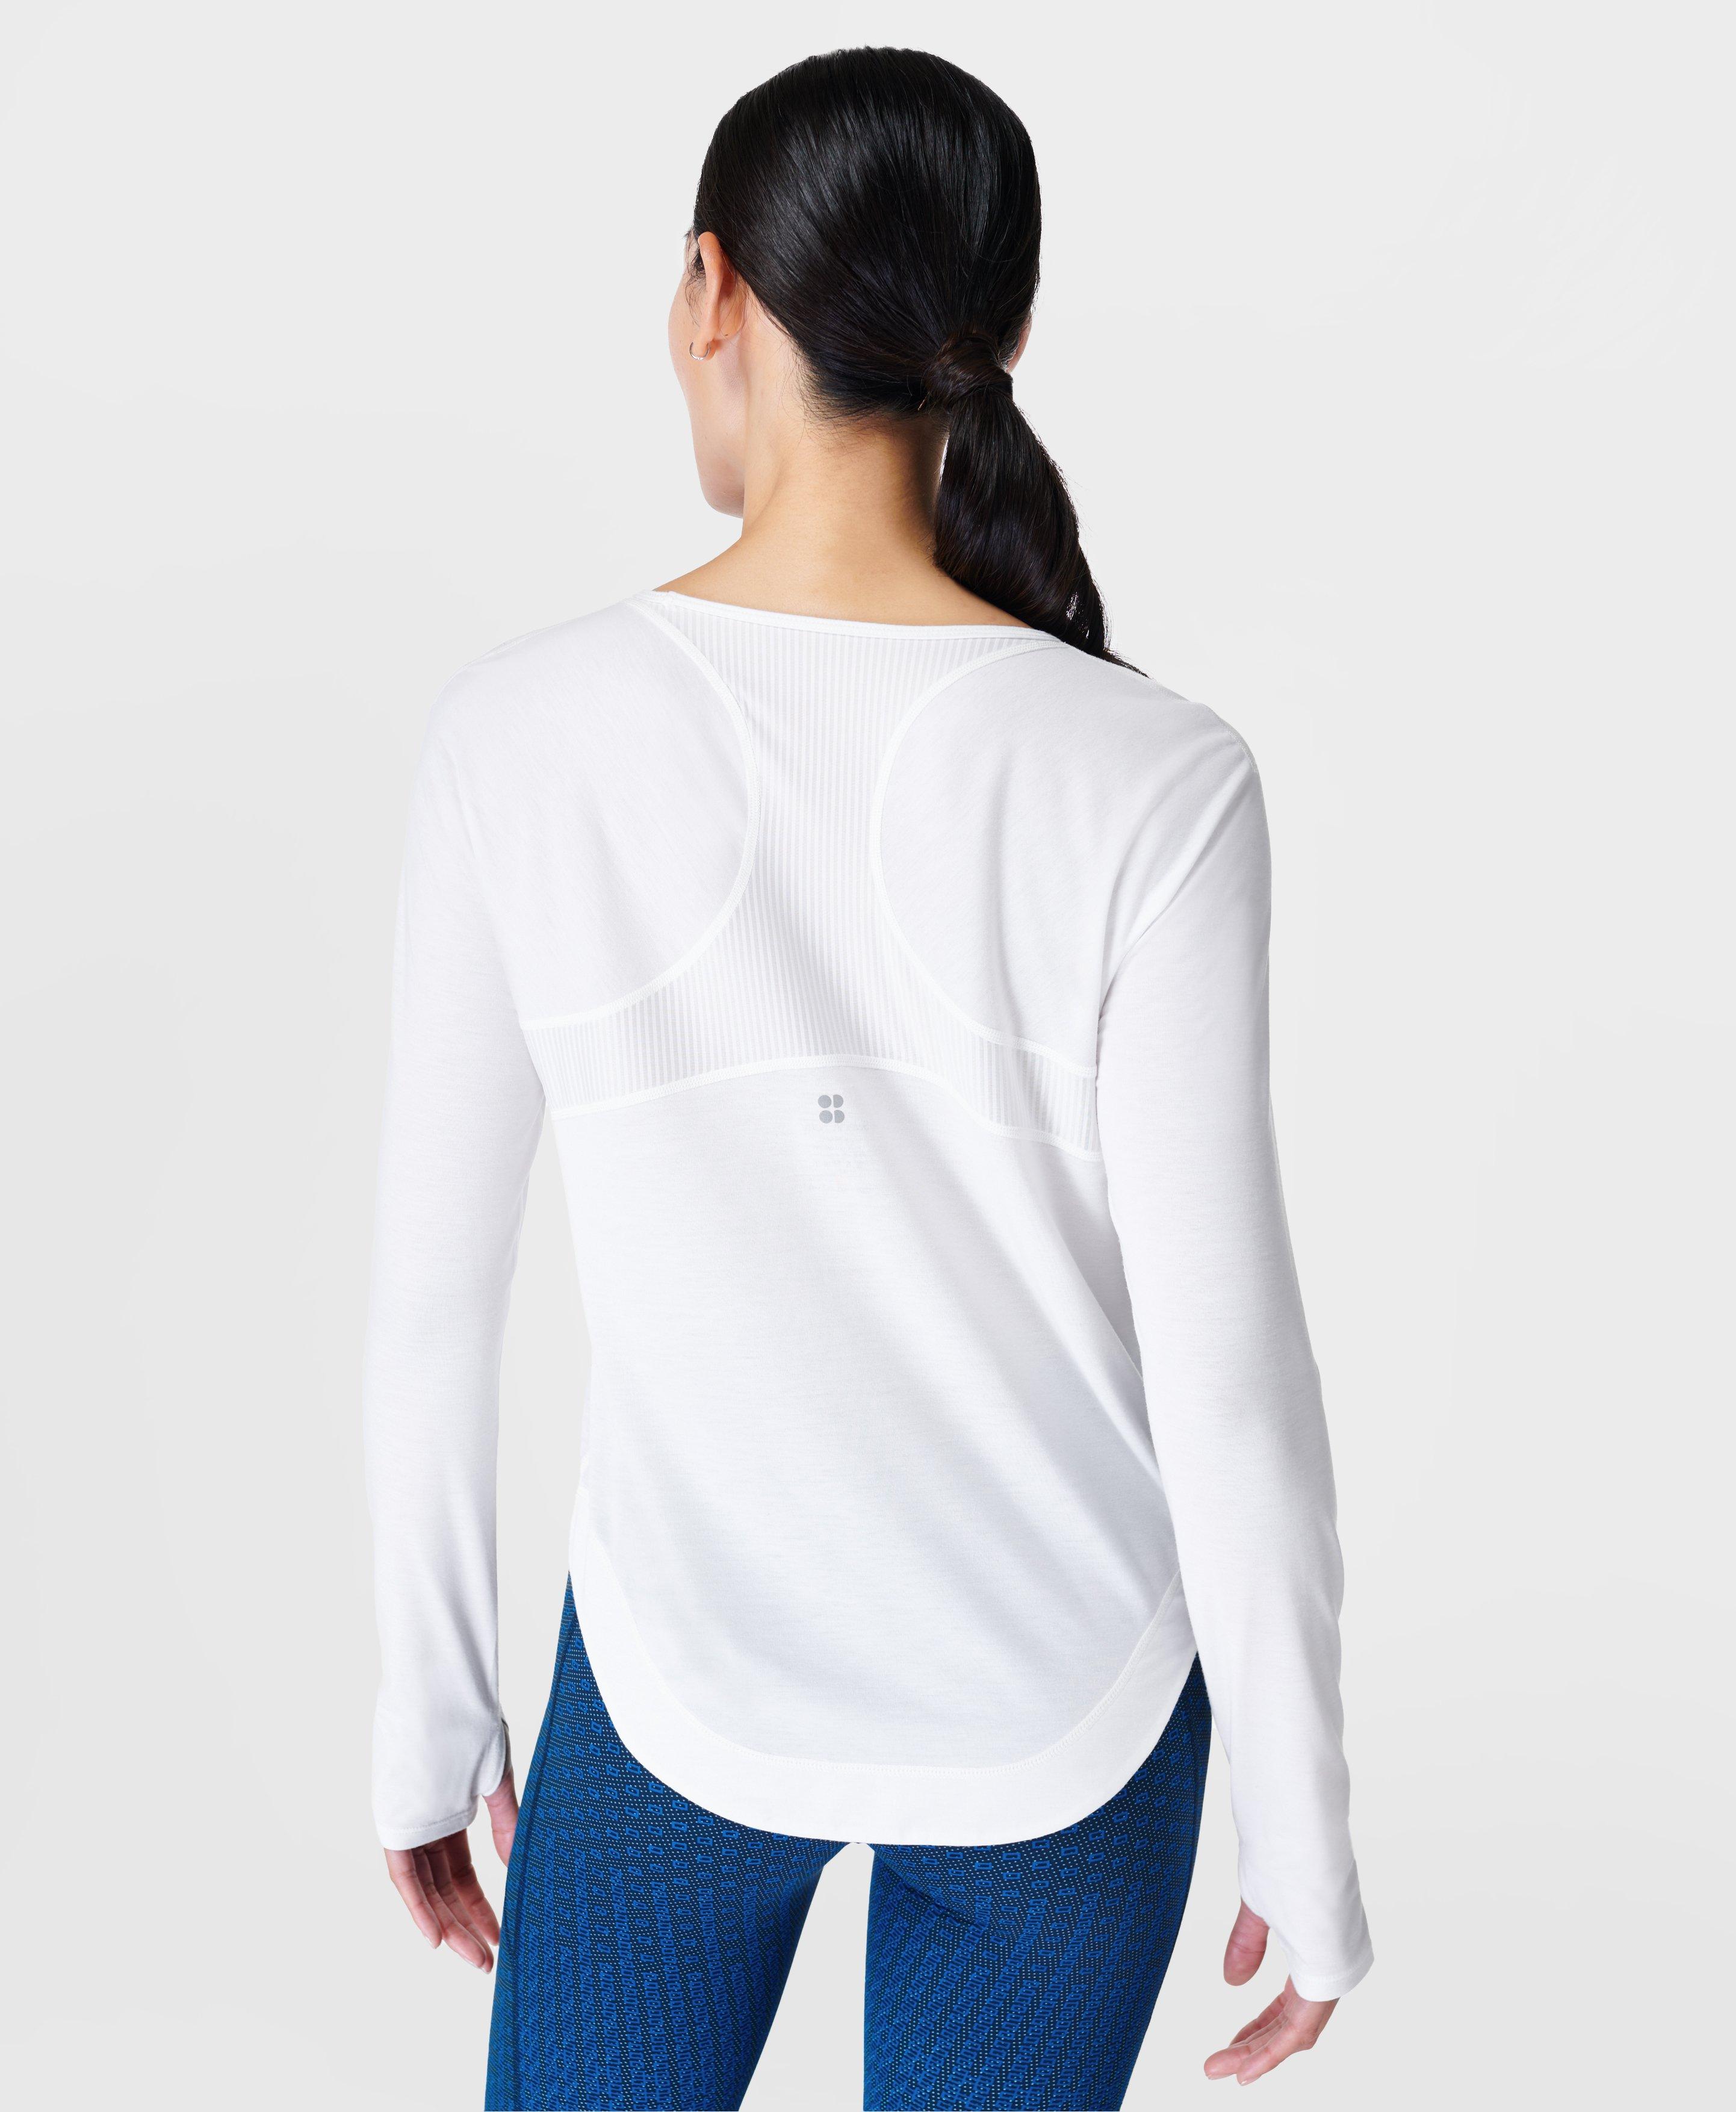 Women's Long Sleeve Gym Tops & Sweatshirts